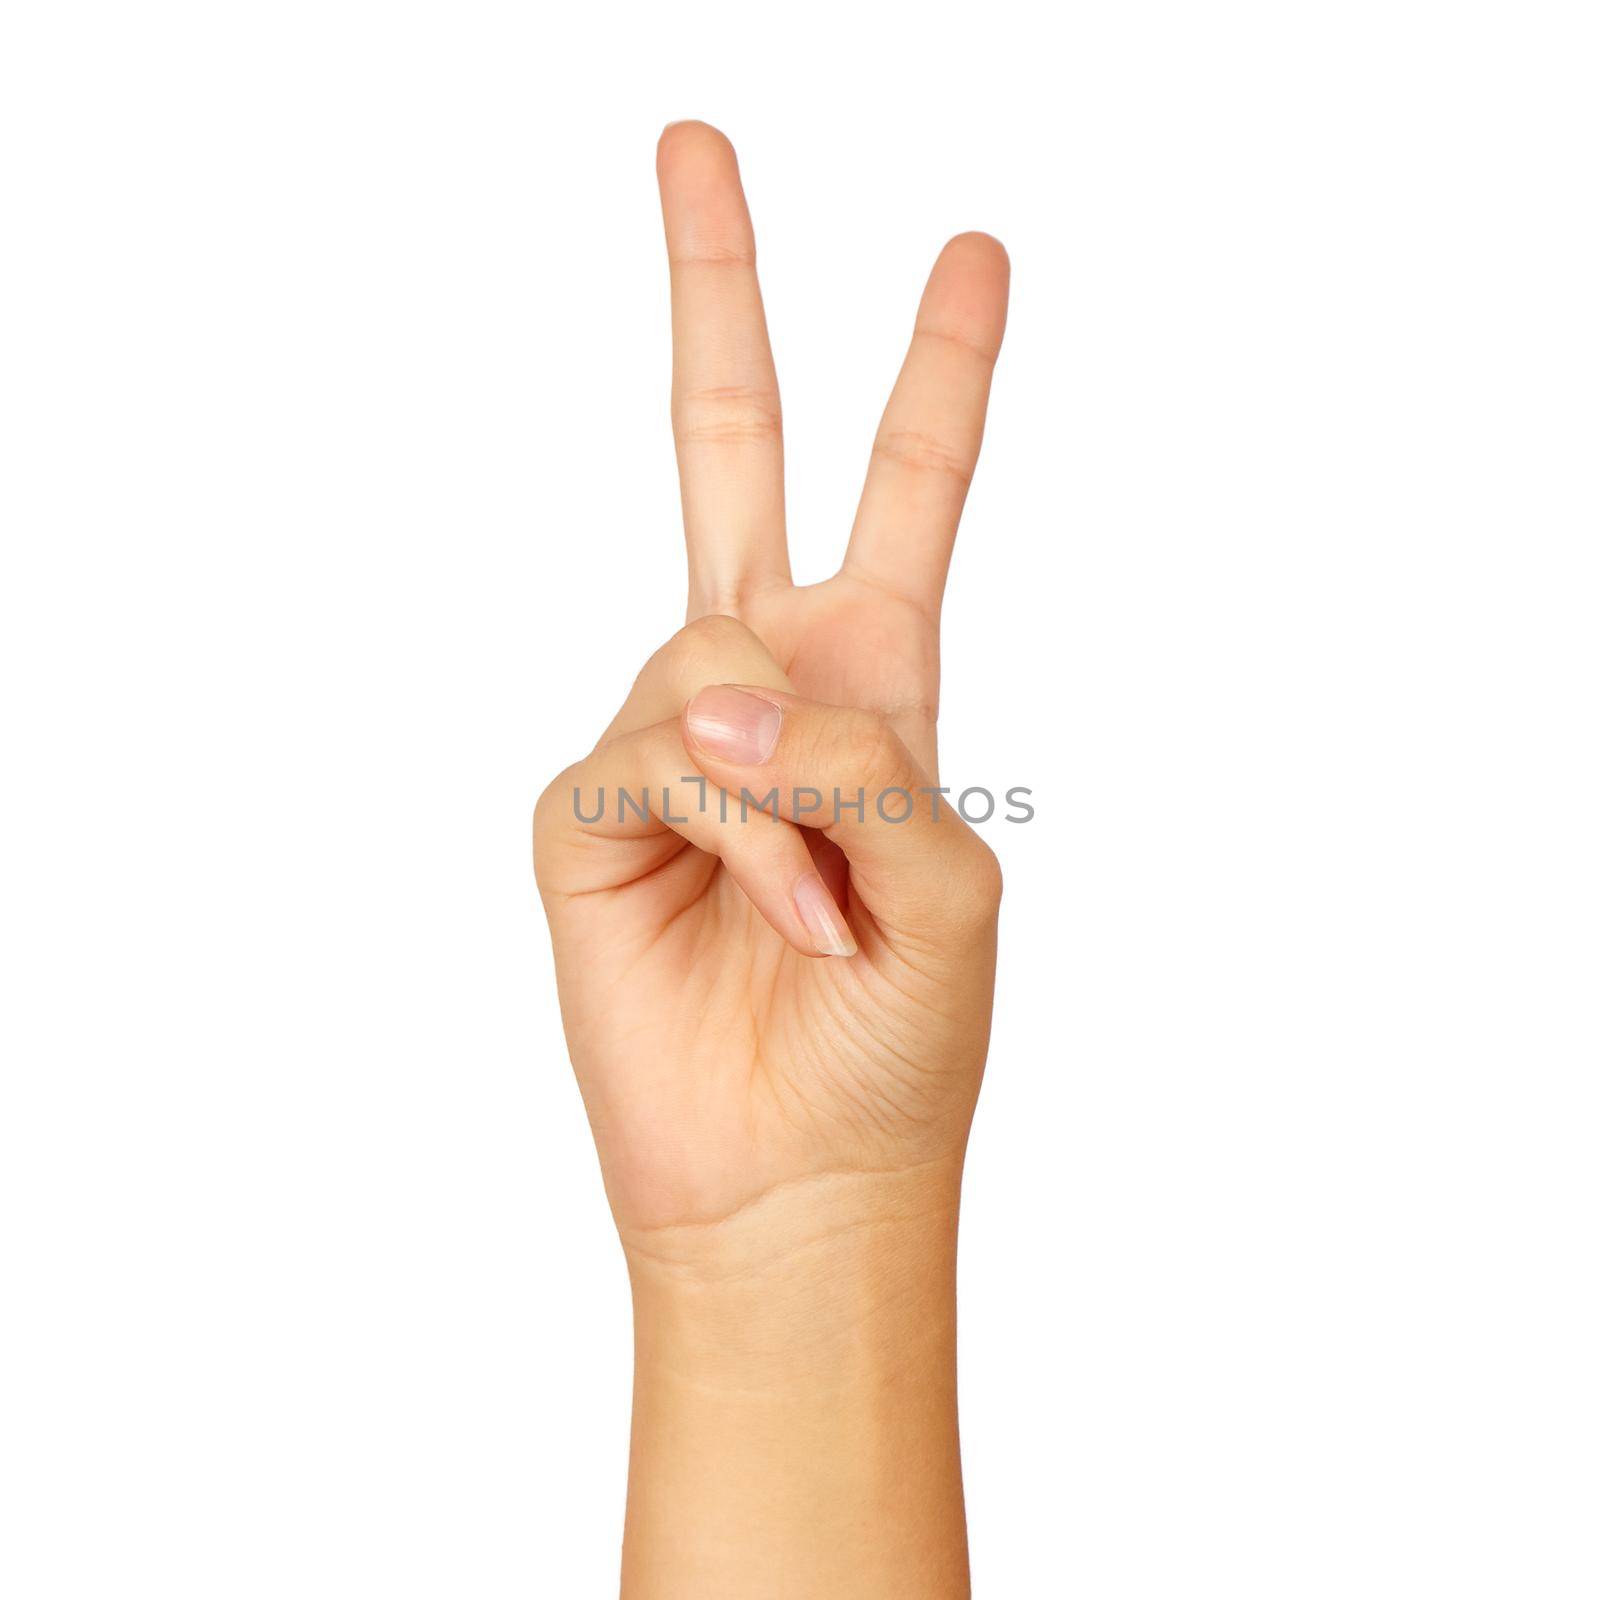 american sign language number 2 by raddnatt